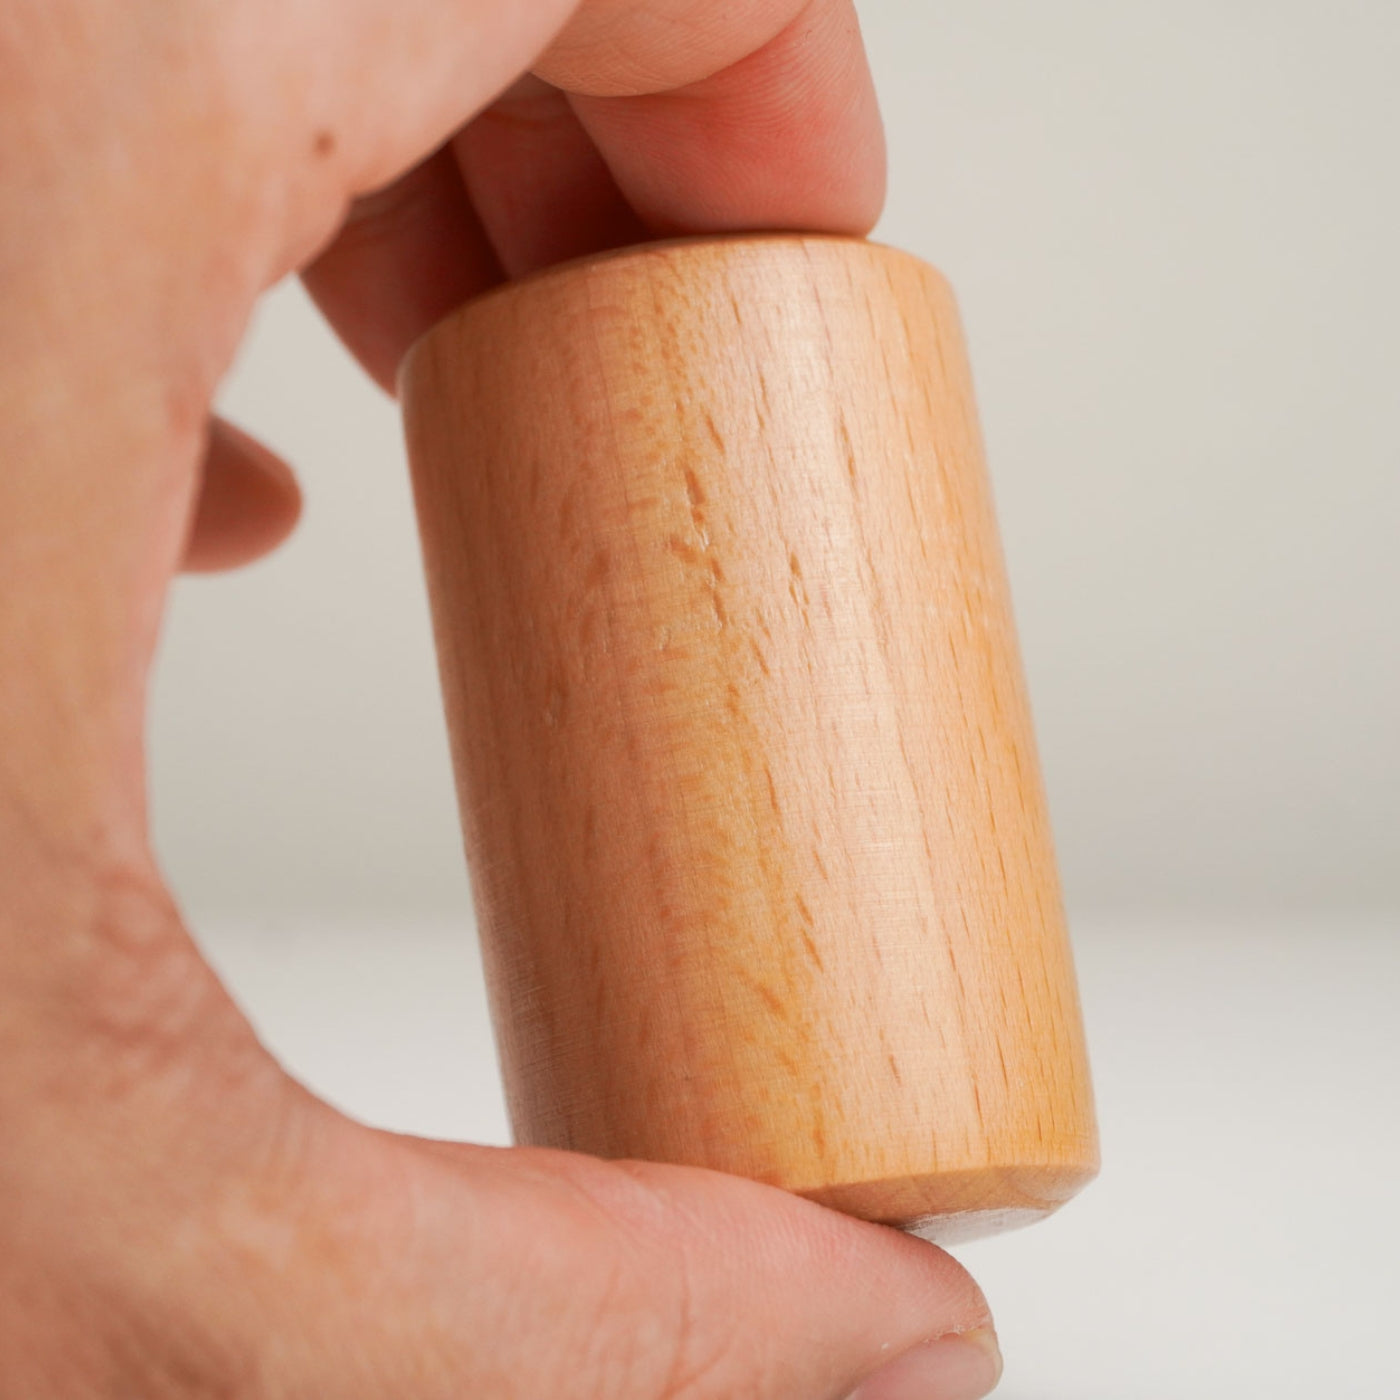 Handmade shaker made of light wood - Small